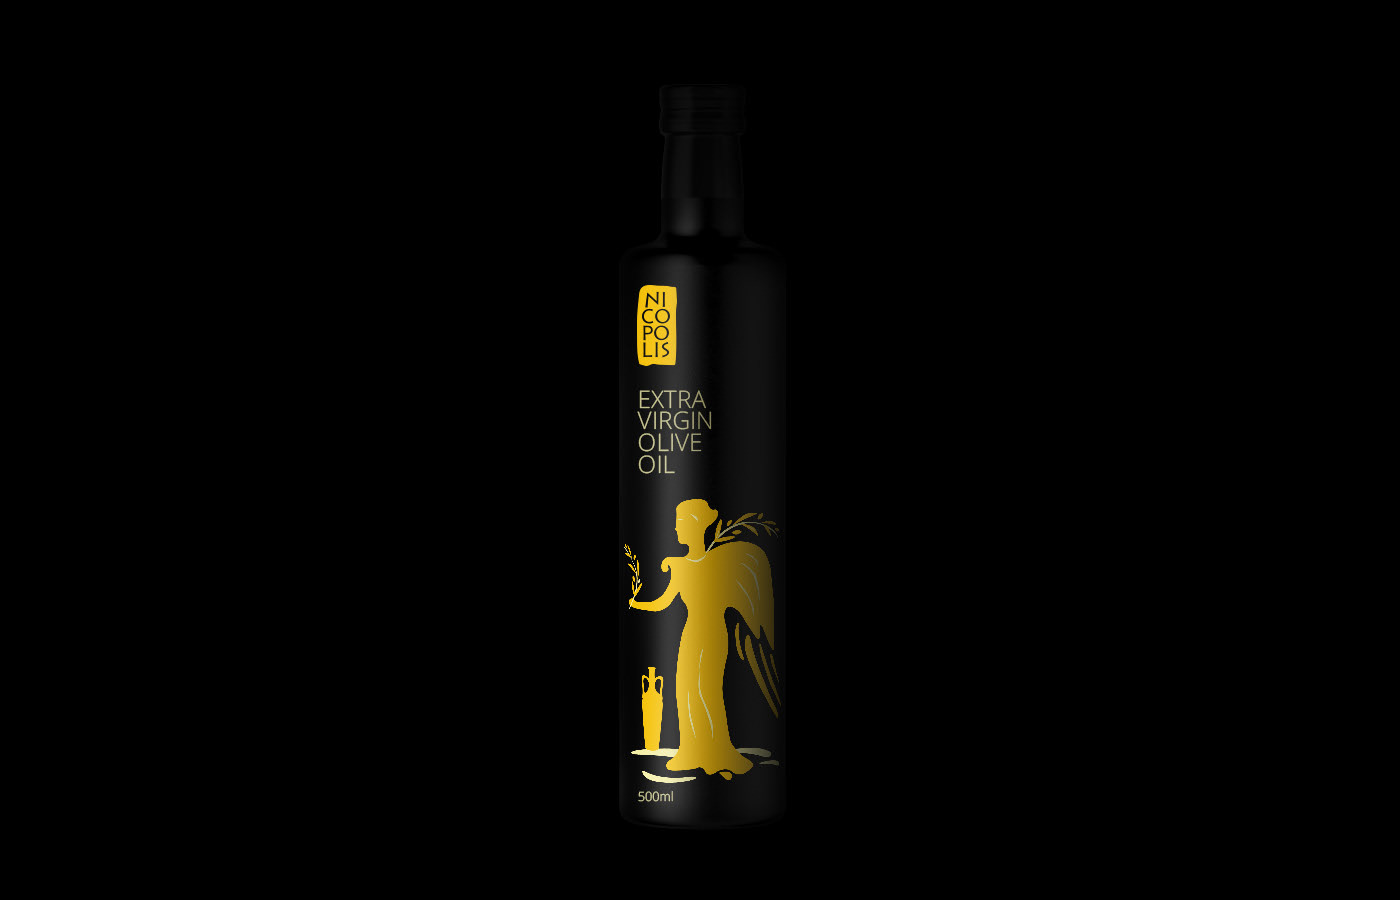 nicopolis olive oil dorica bottle